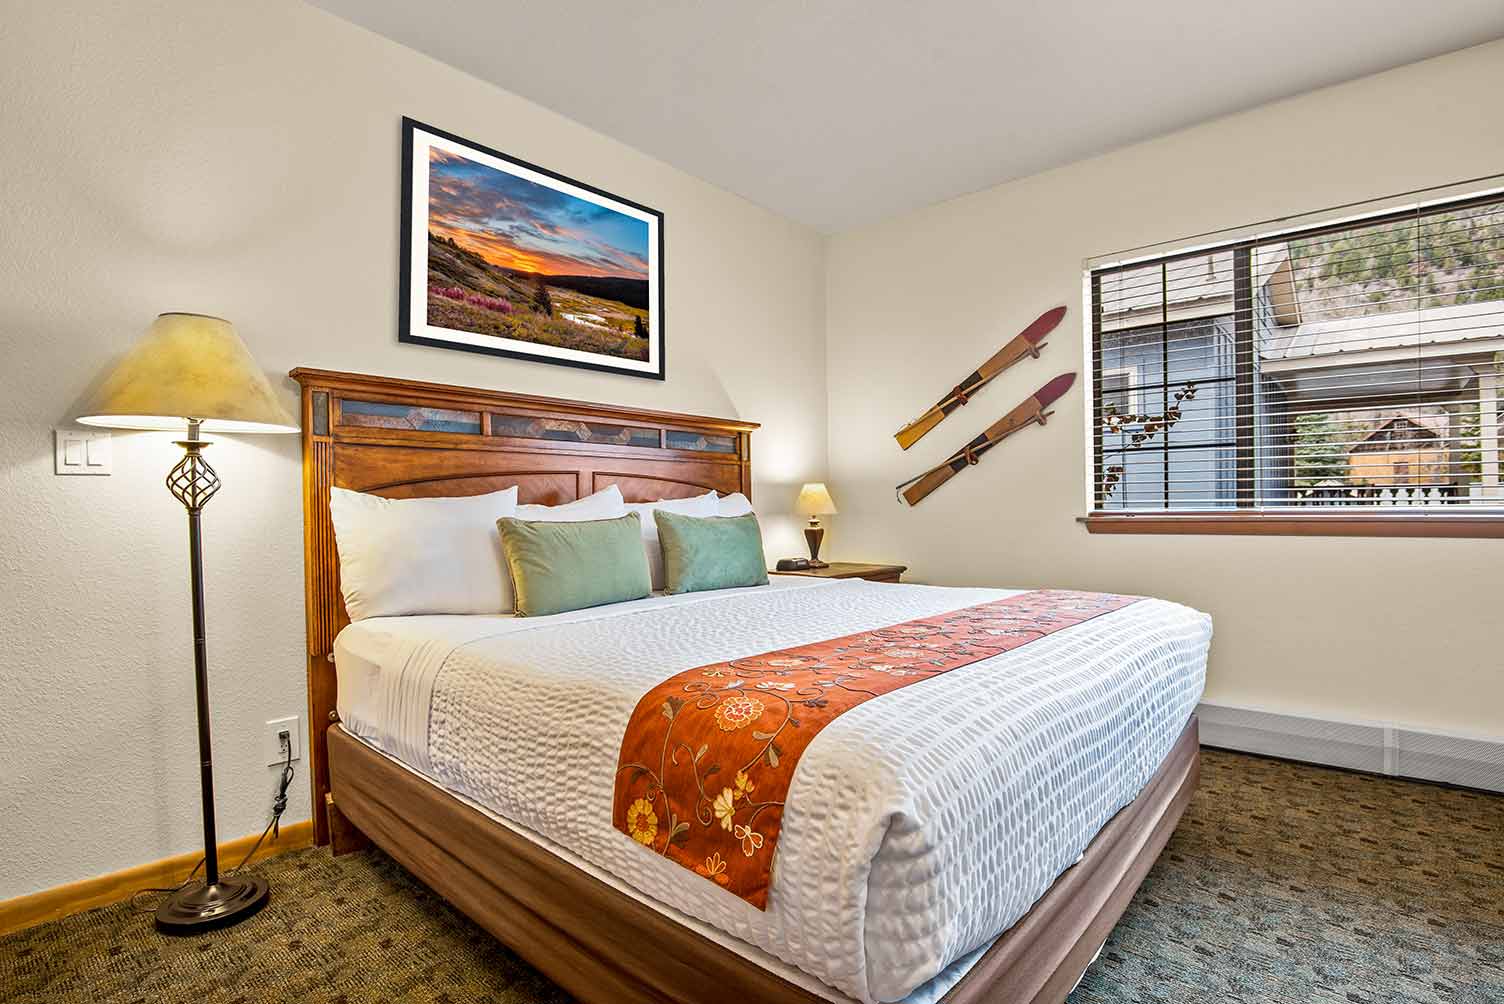 Box Canyon Lodge & Hot Springs apartment bedroom